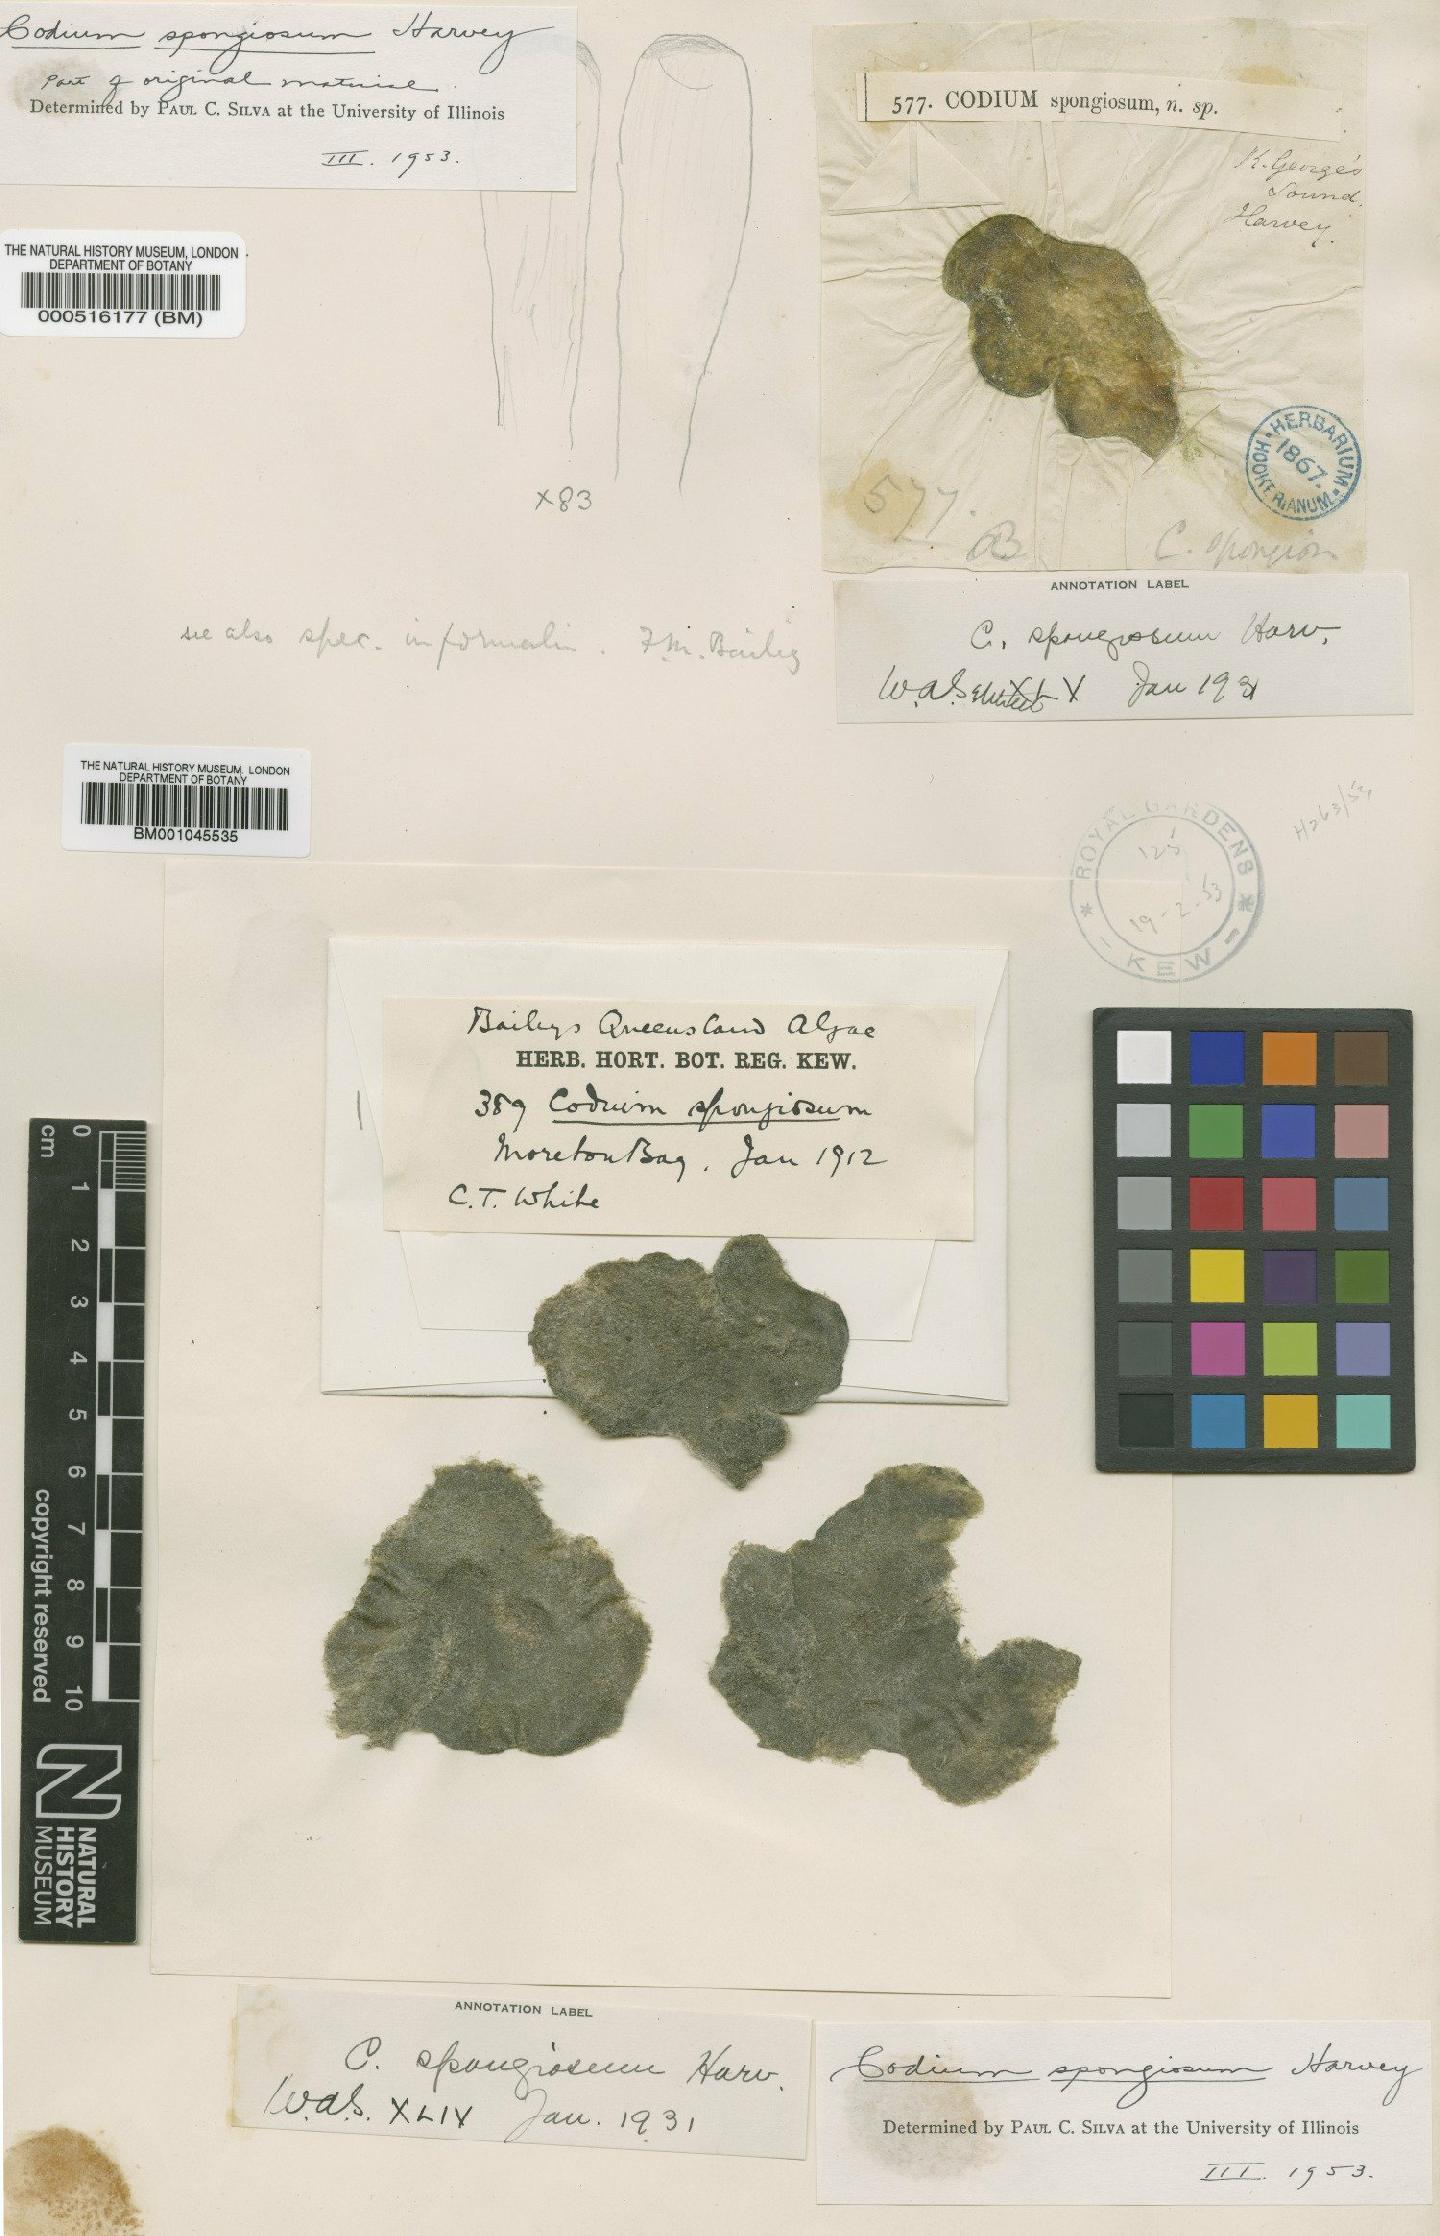 To NHMUK collection (Codium spongiosum Harvey; TYPE; NHMUK:ecatalogue:4830783)